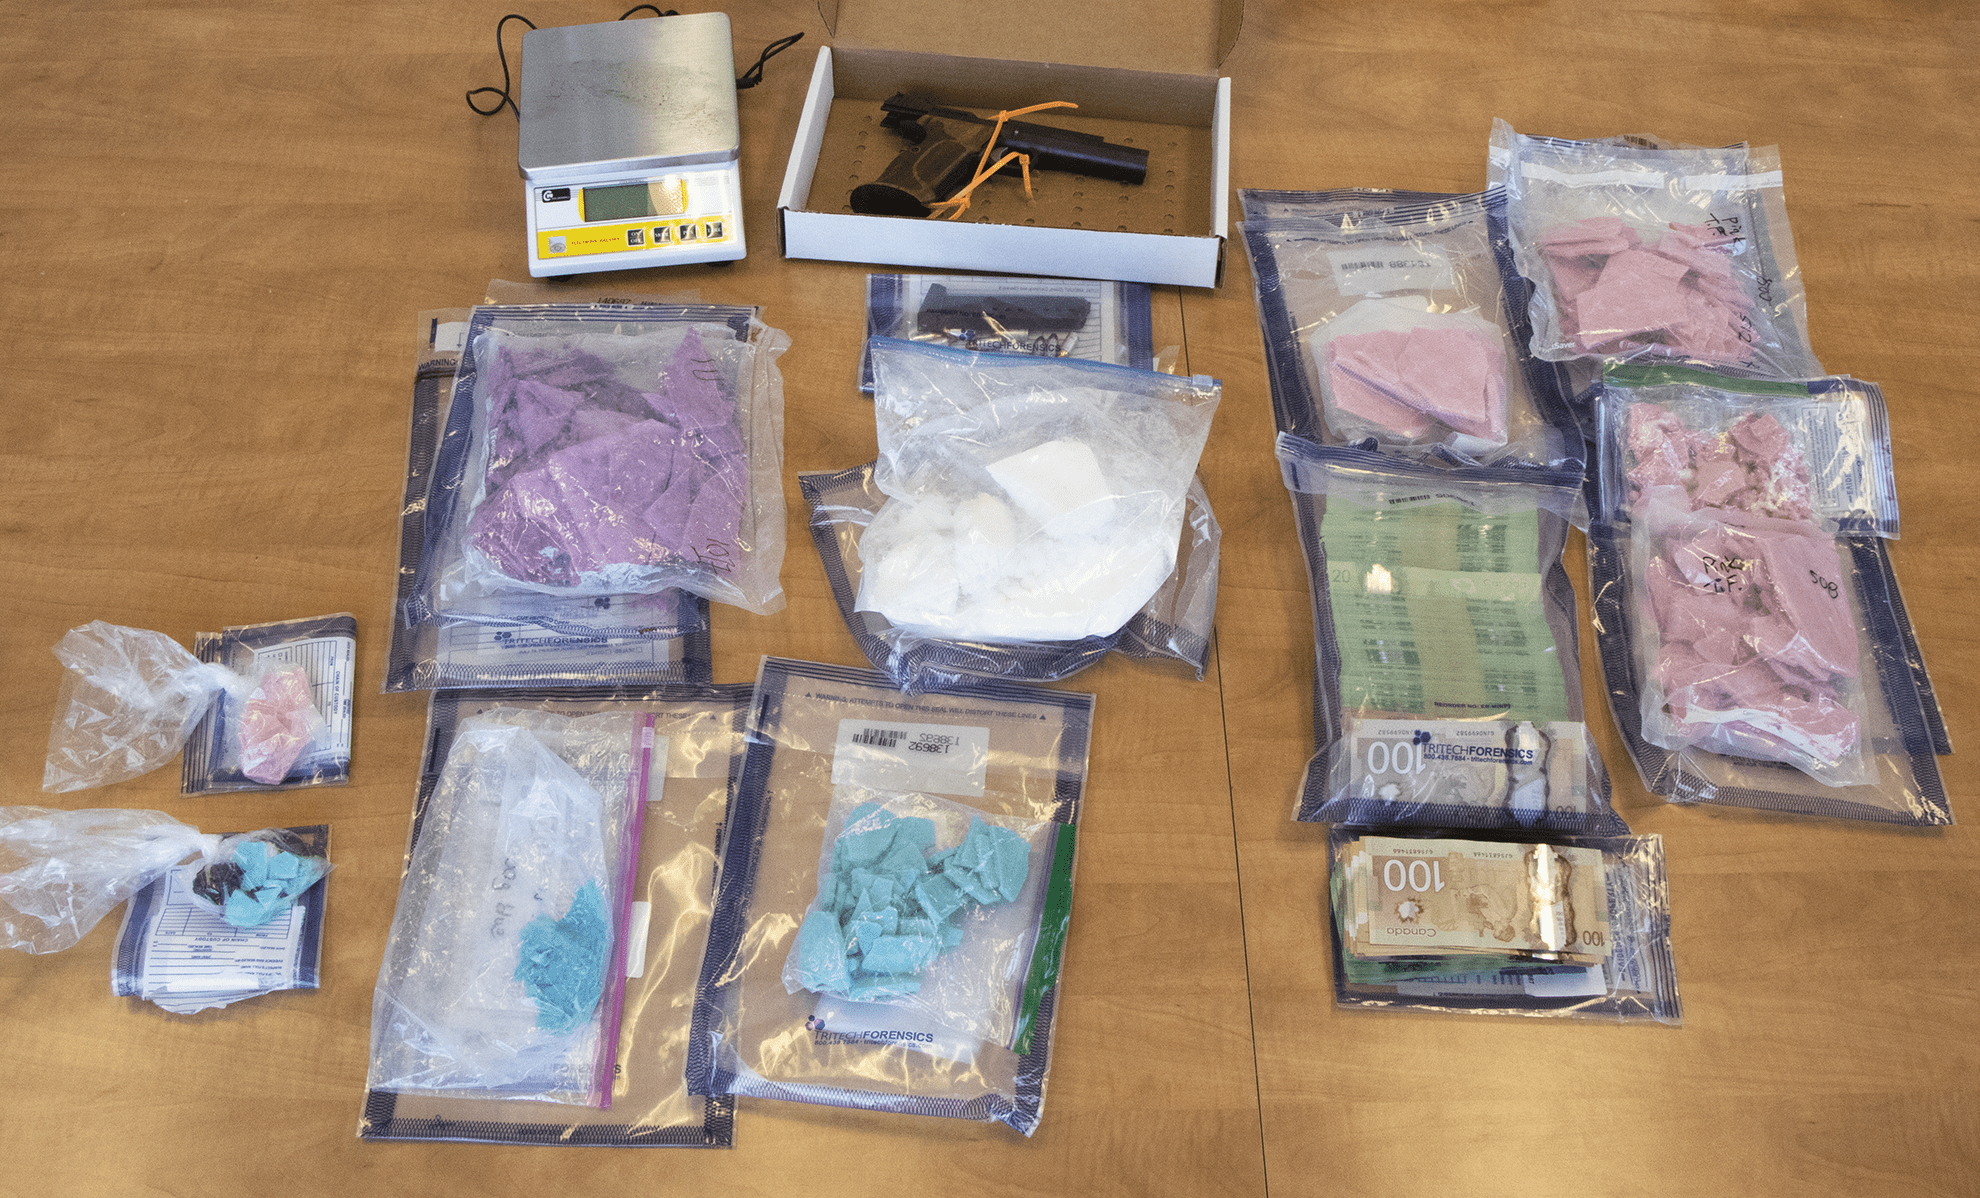 Virginia agencies seize 66K fentanyl pills in drug operation